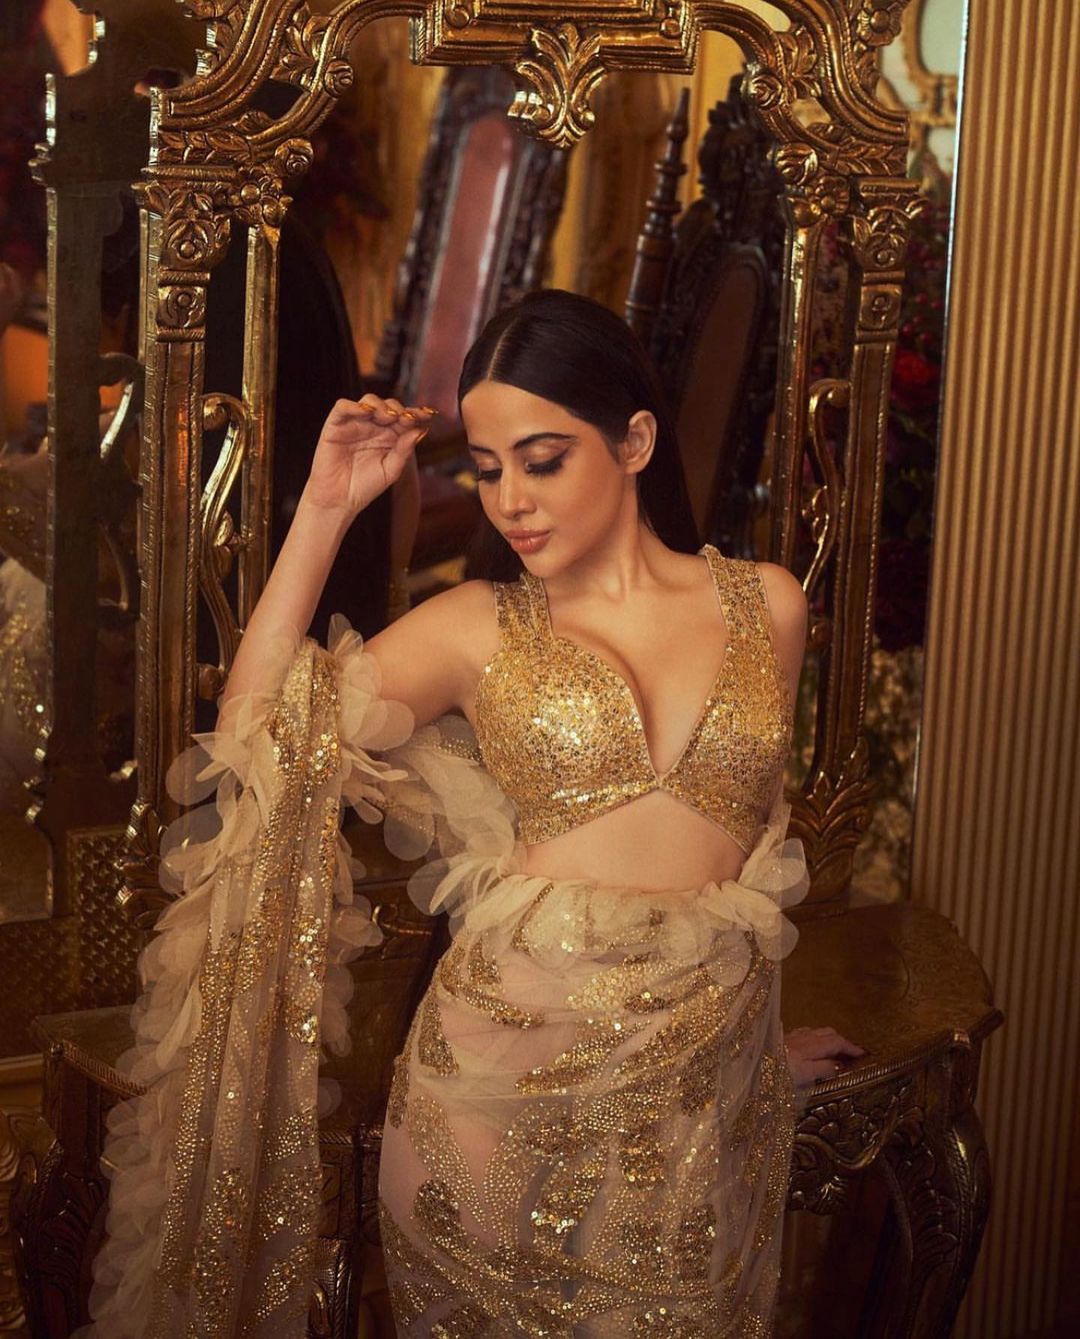 Uorfi Javed looks like a goddess as she adorns in an opulent attire by designer duo Abu Jani and Sandeep Khosla